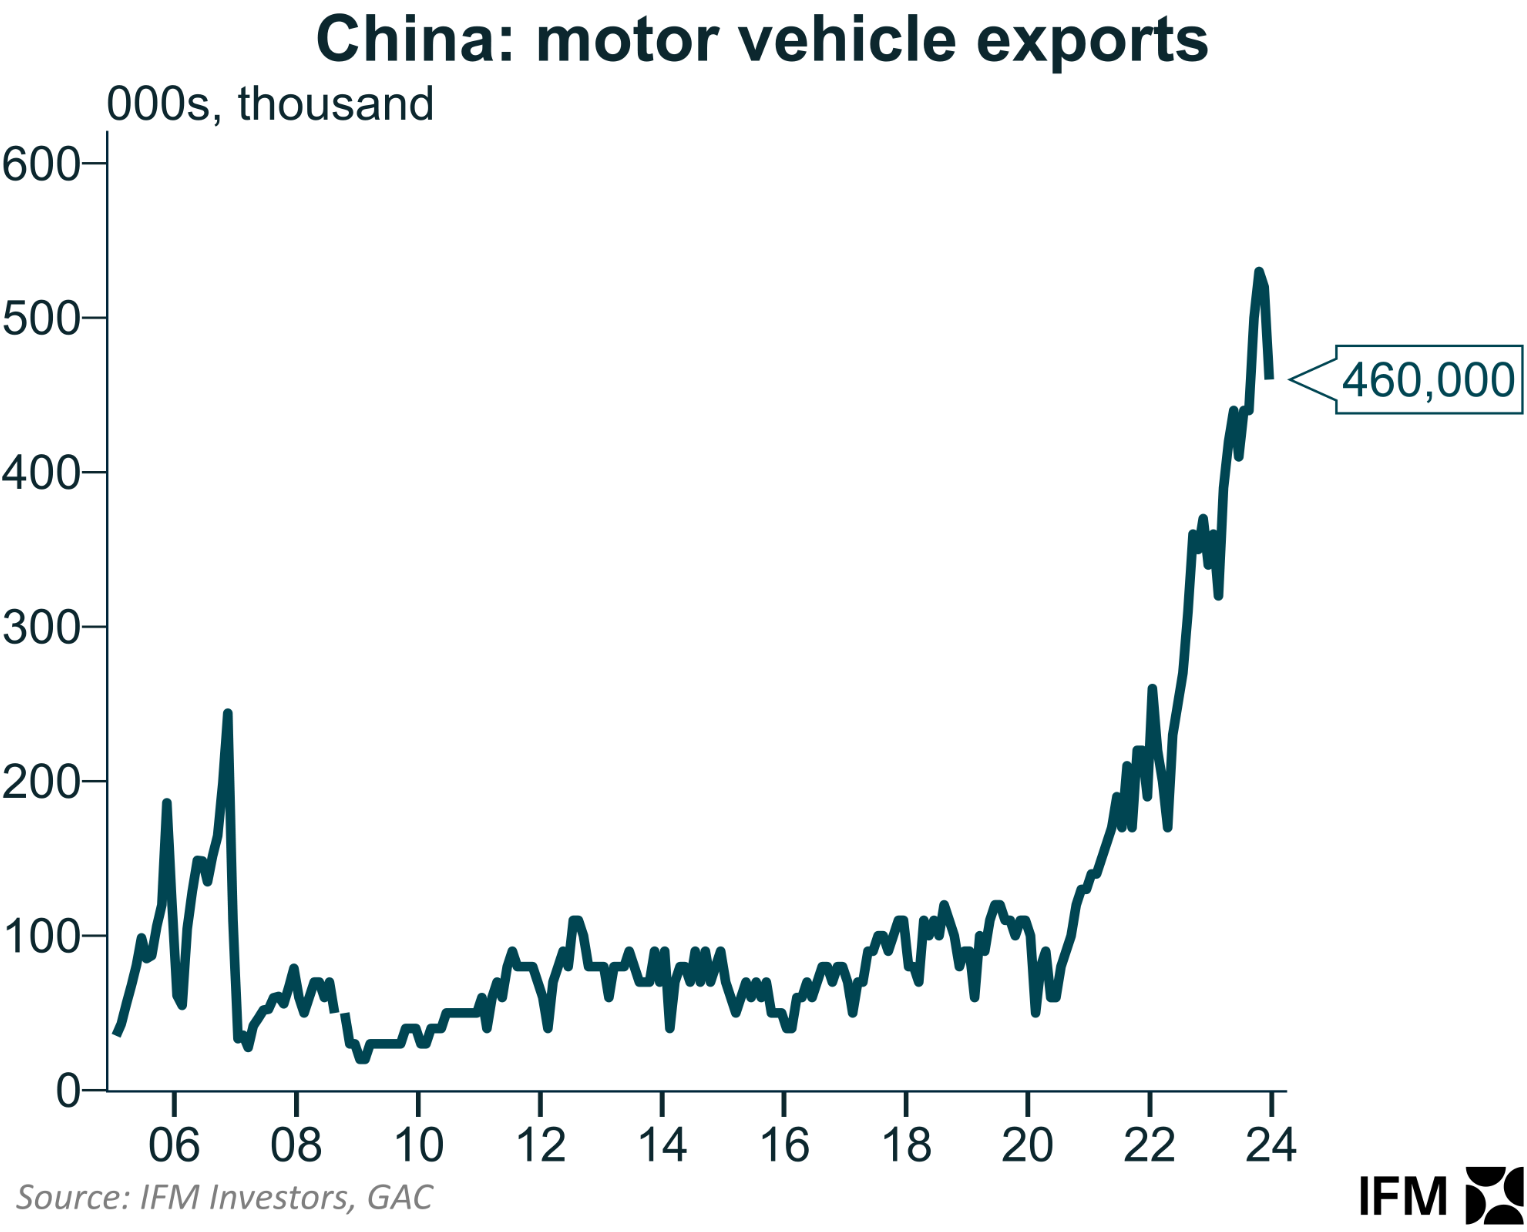 China motor vehicle exports